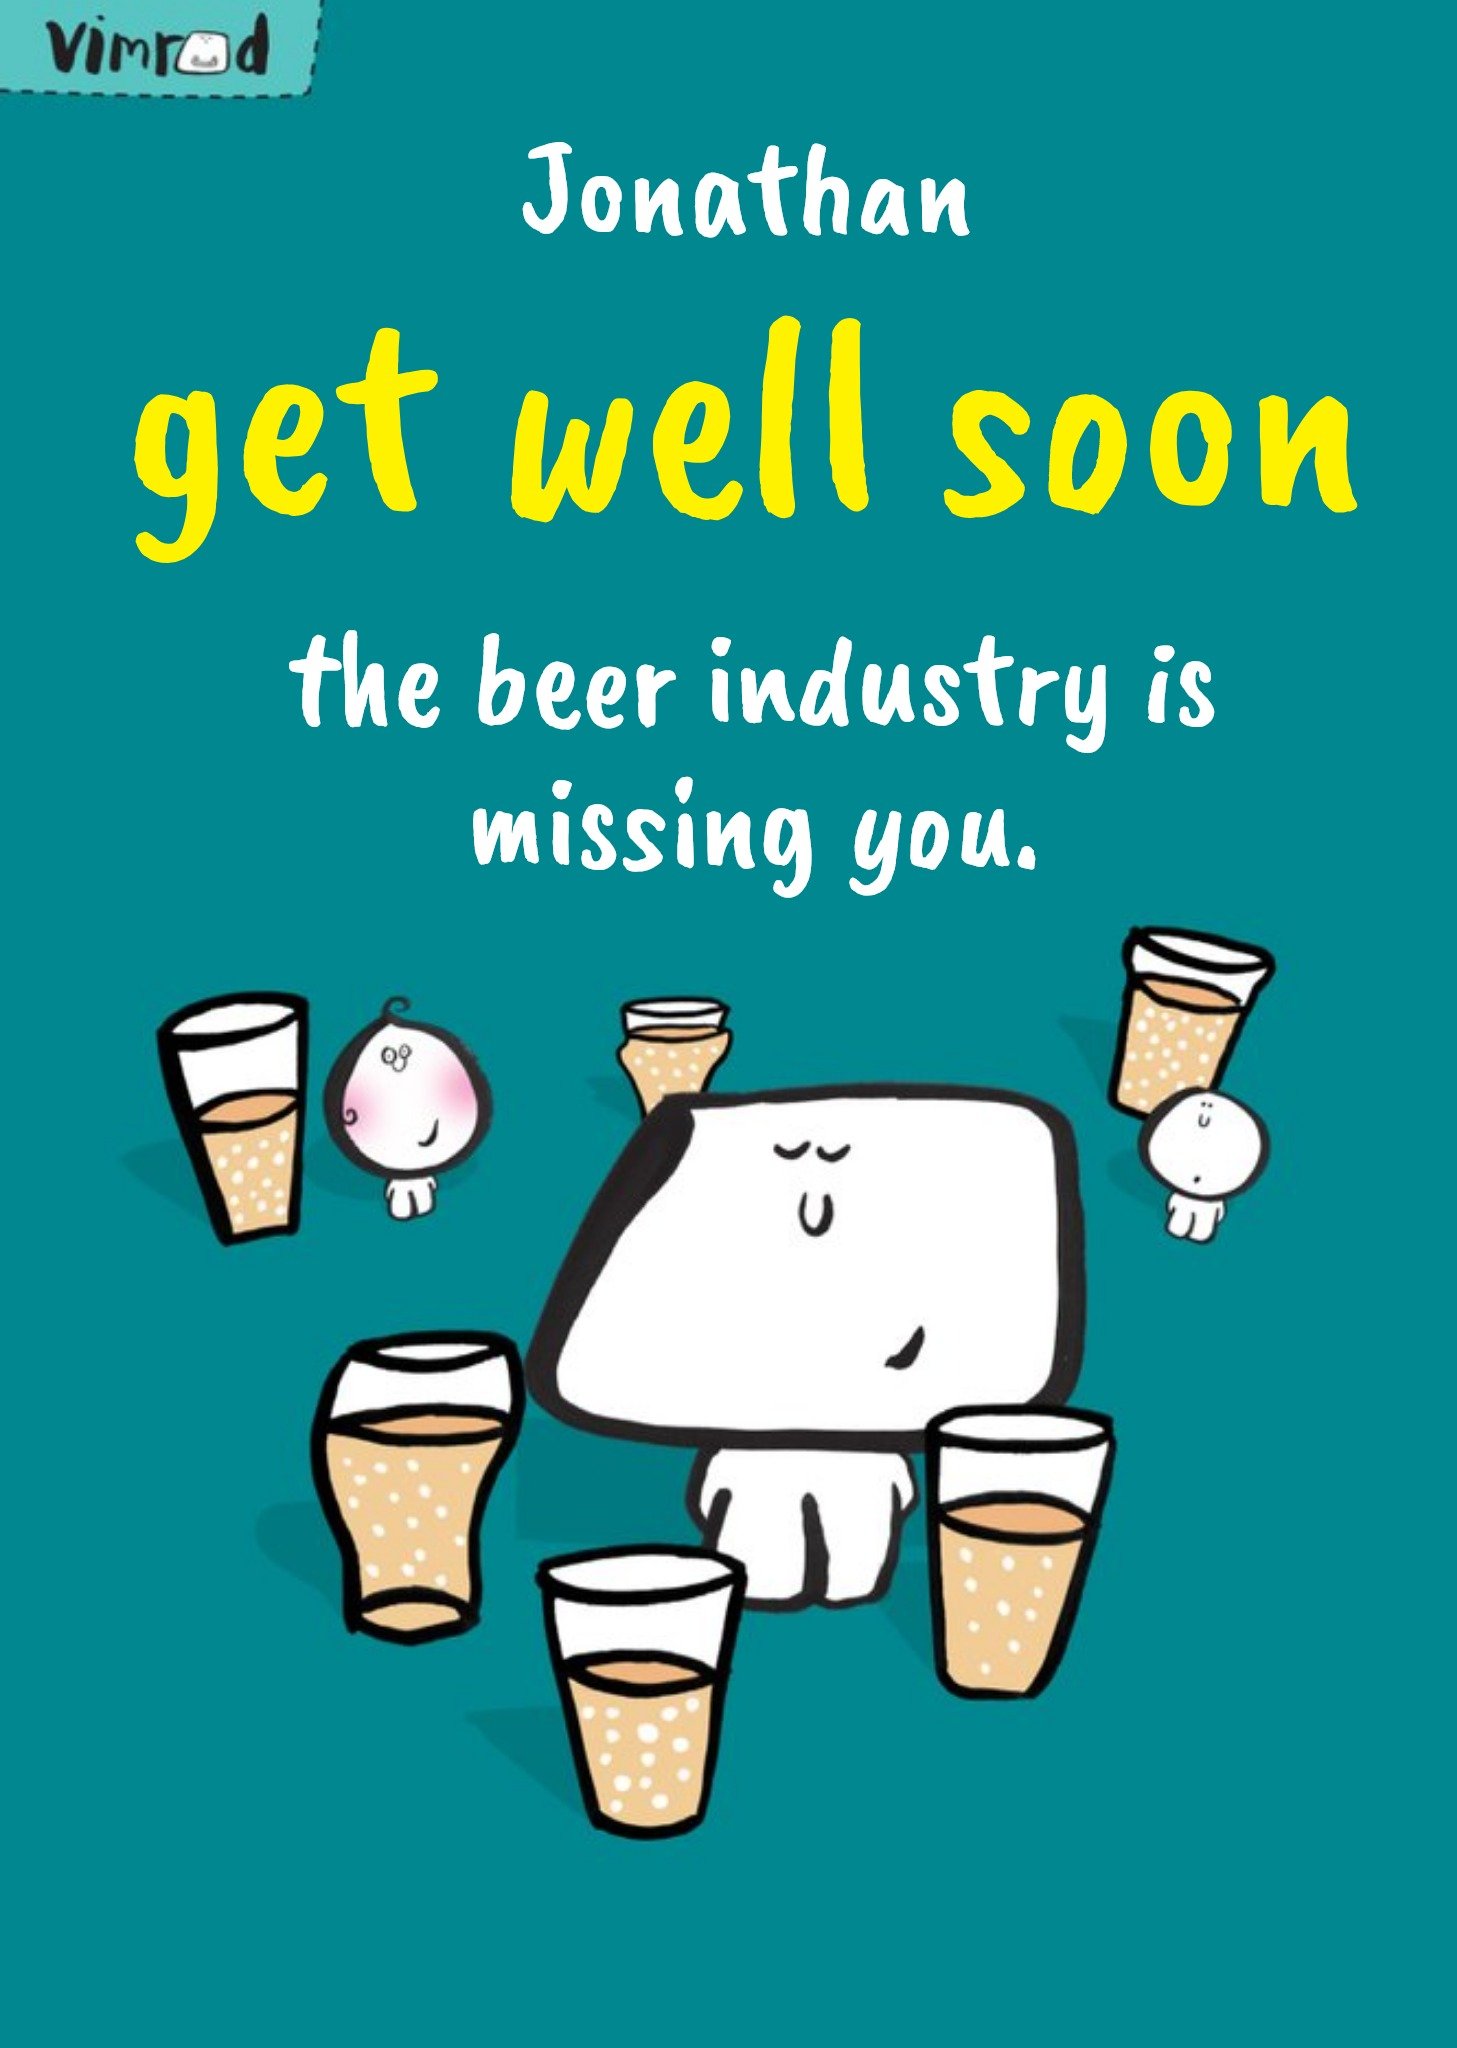 Moonpig Vimrod The Beer Industry Card Is Missing You Personalised Get Well Soon Card Ecard